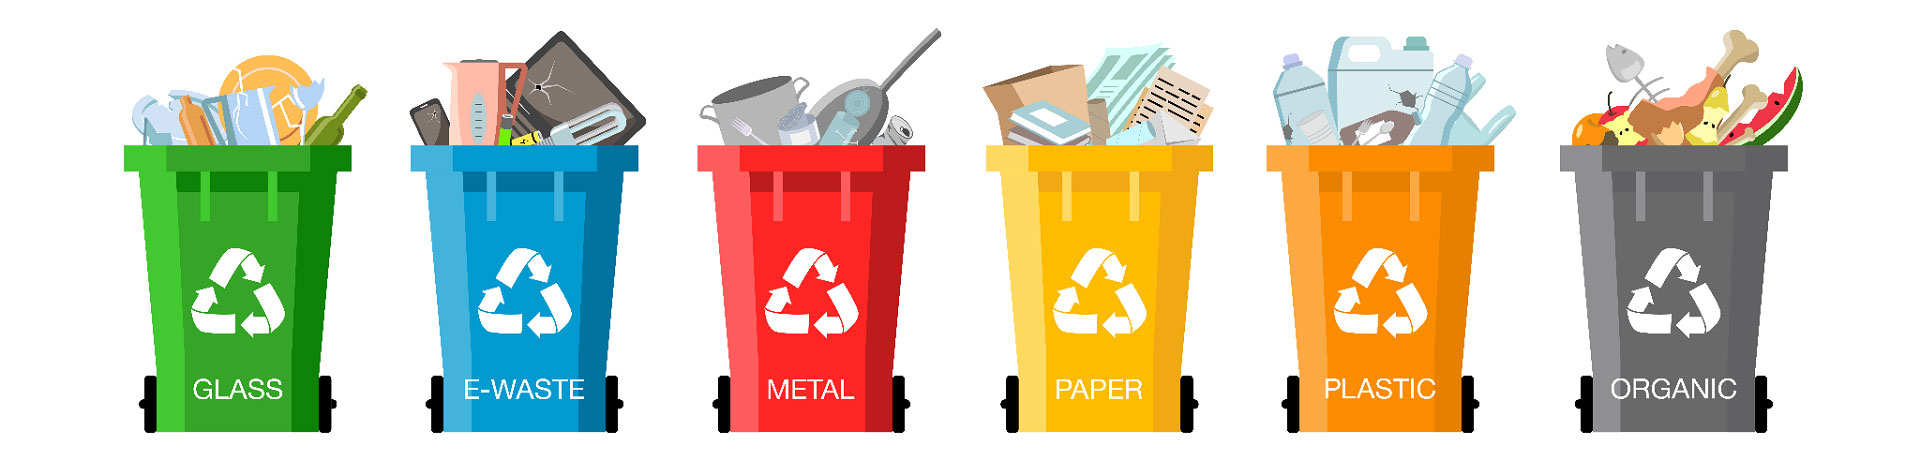 6 Negative Effects of Improper Waste Management - TMK